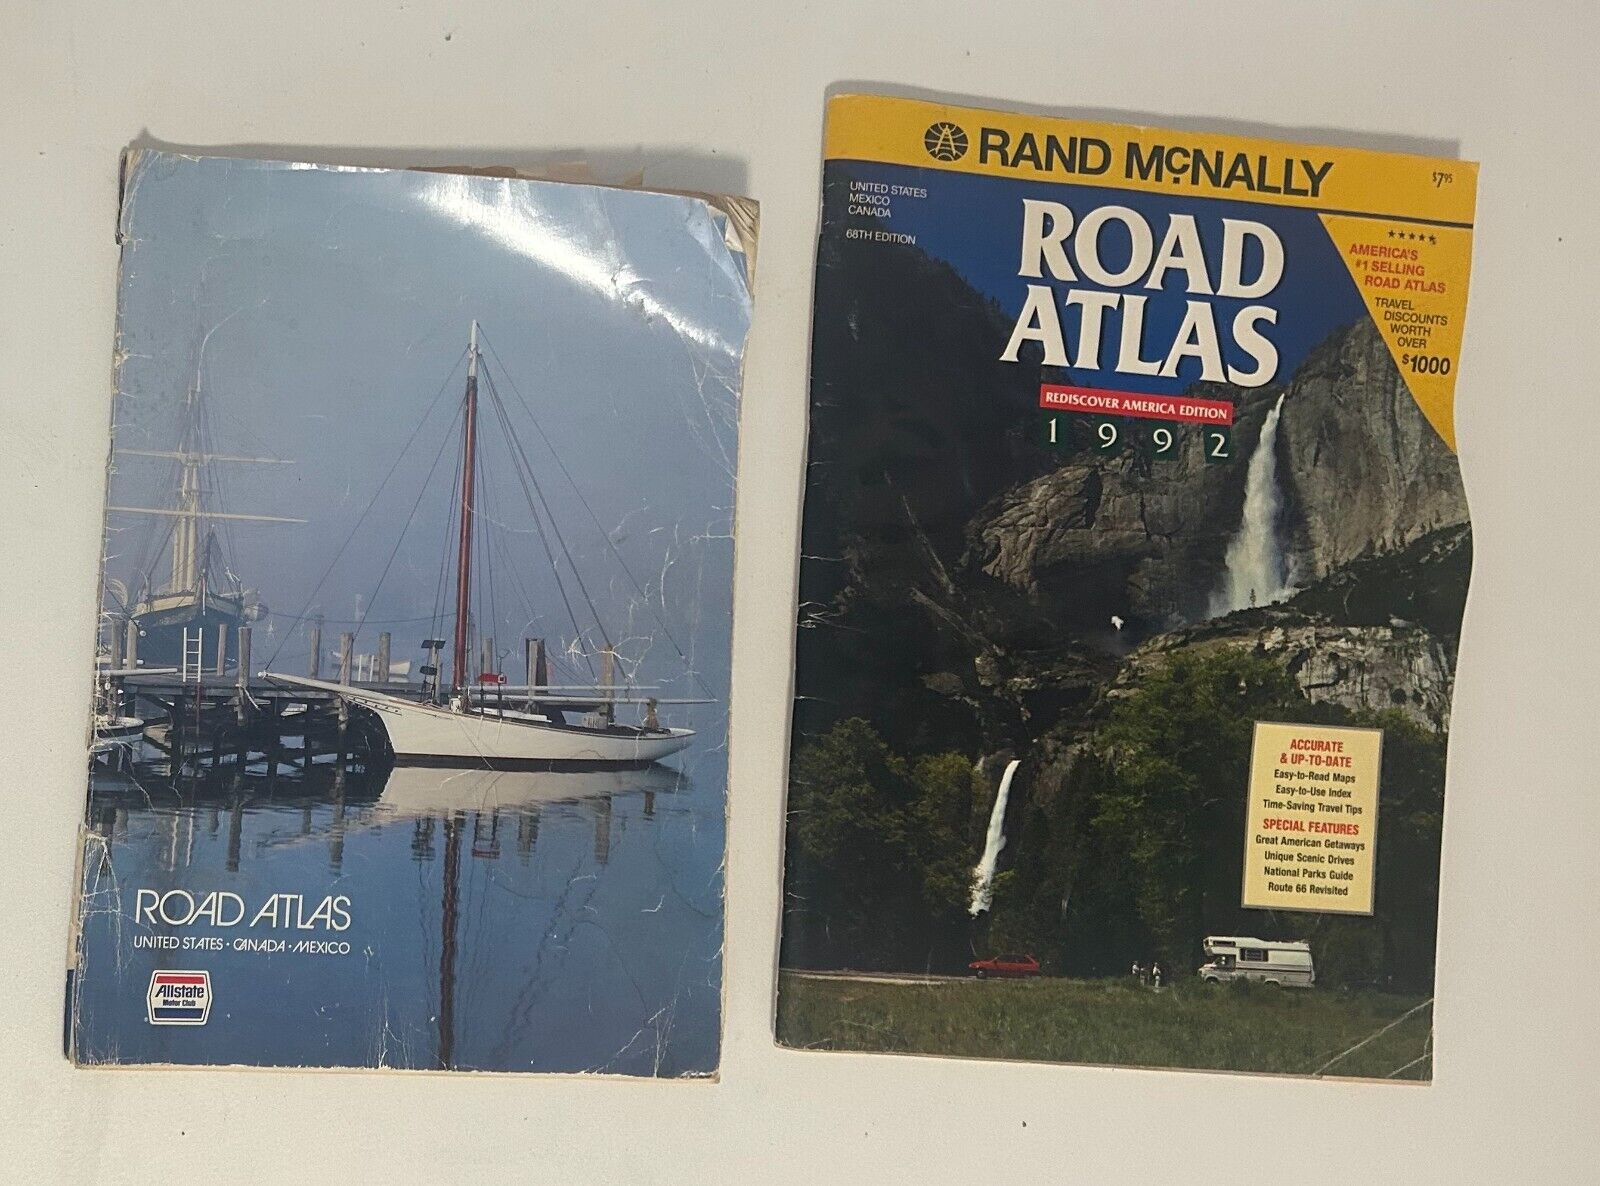 1992 Road Atlas United States, Canada, Mexico; AllState; Rand McNally - USED